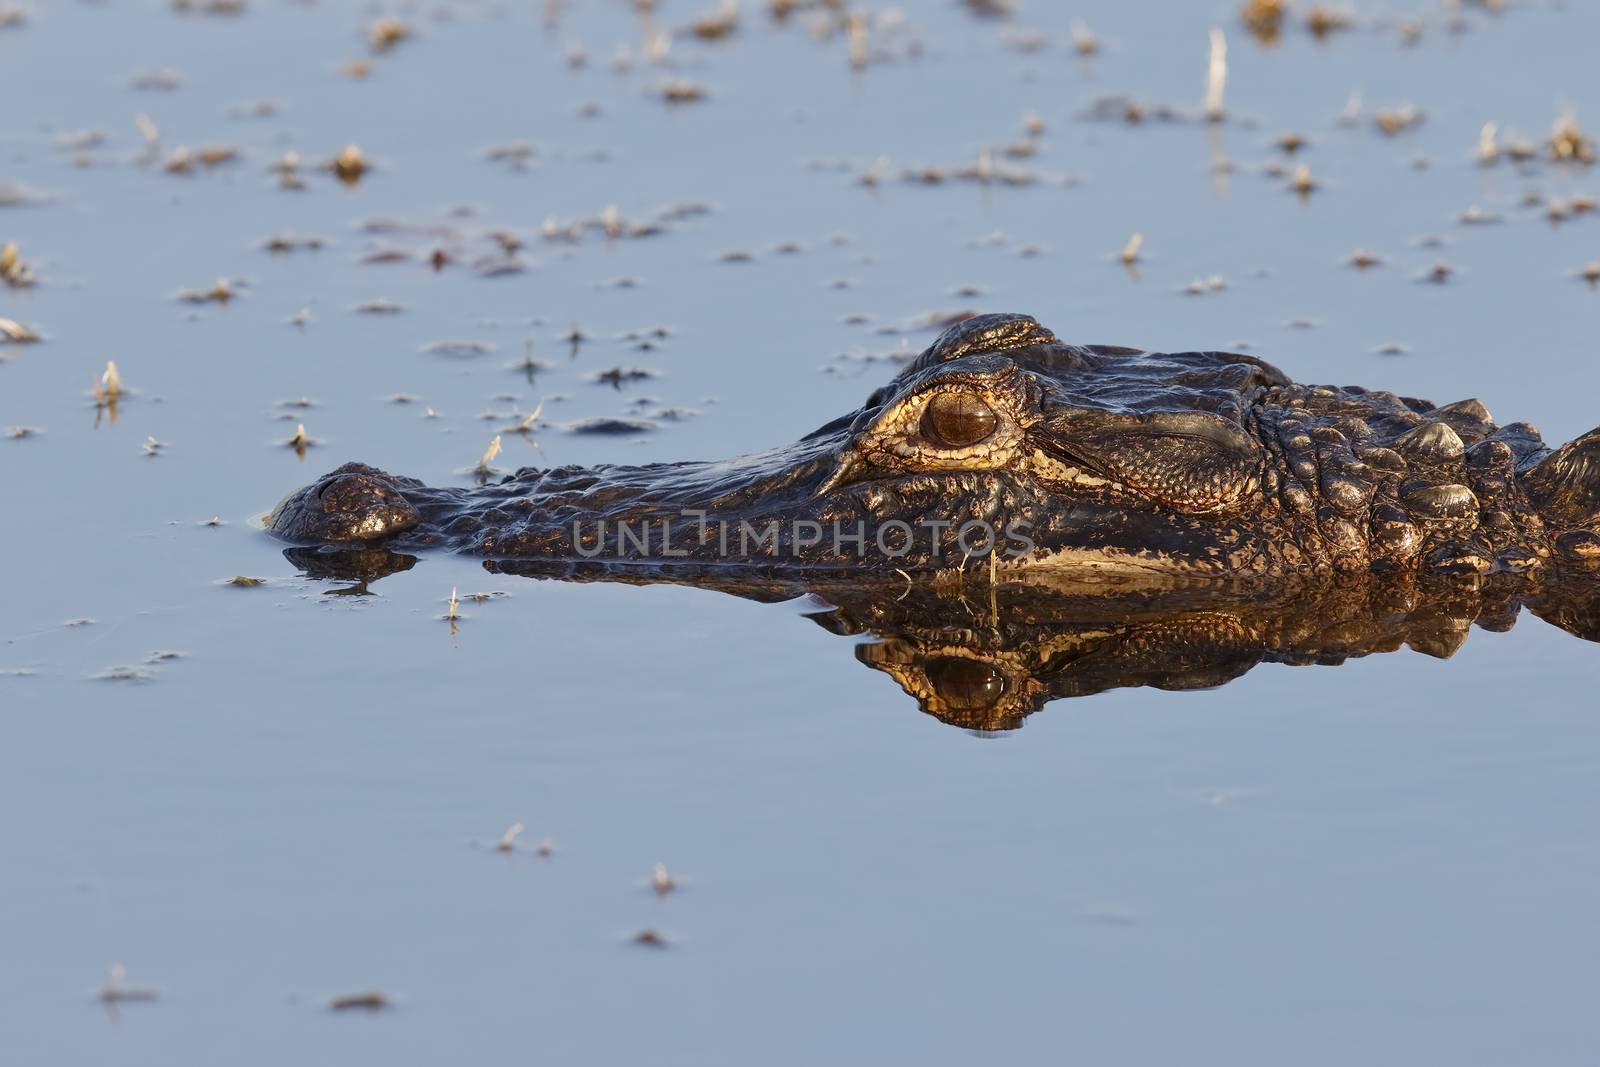 Closeup of an American Alligator (Alligator mississippiensis) floating in a pond - Merritt Island, Florida